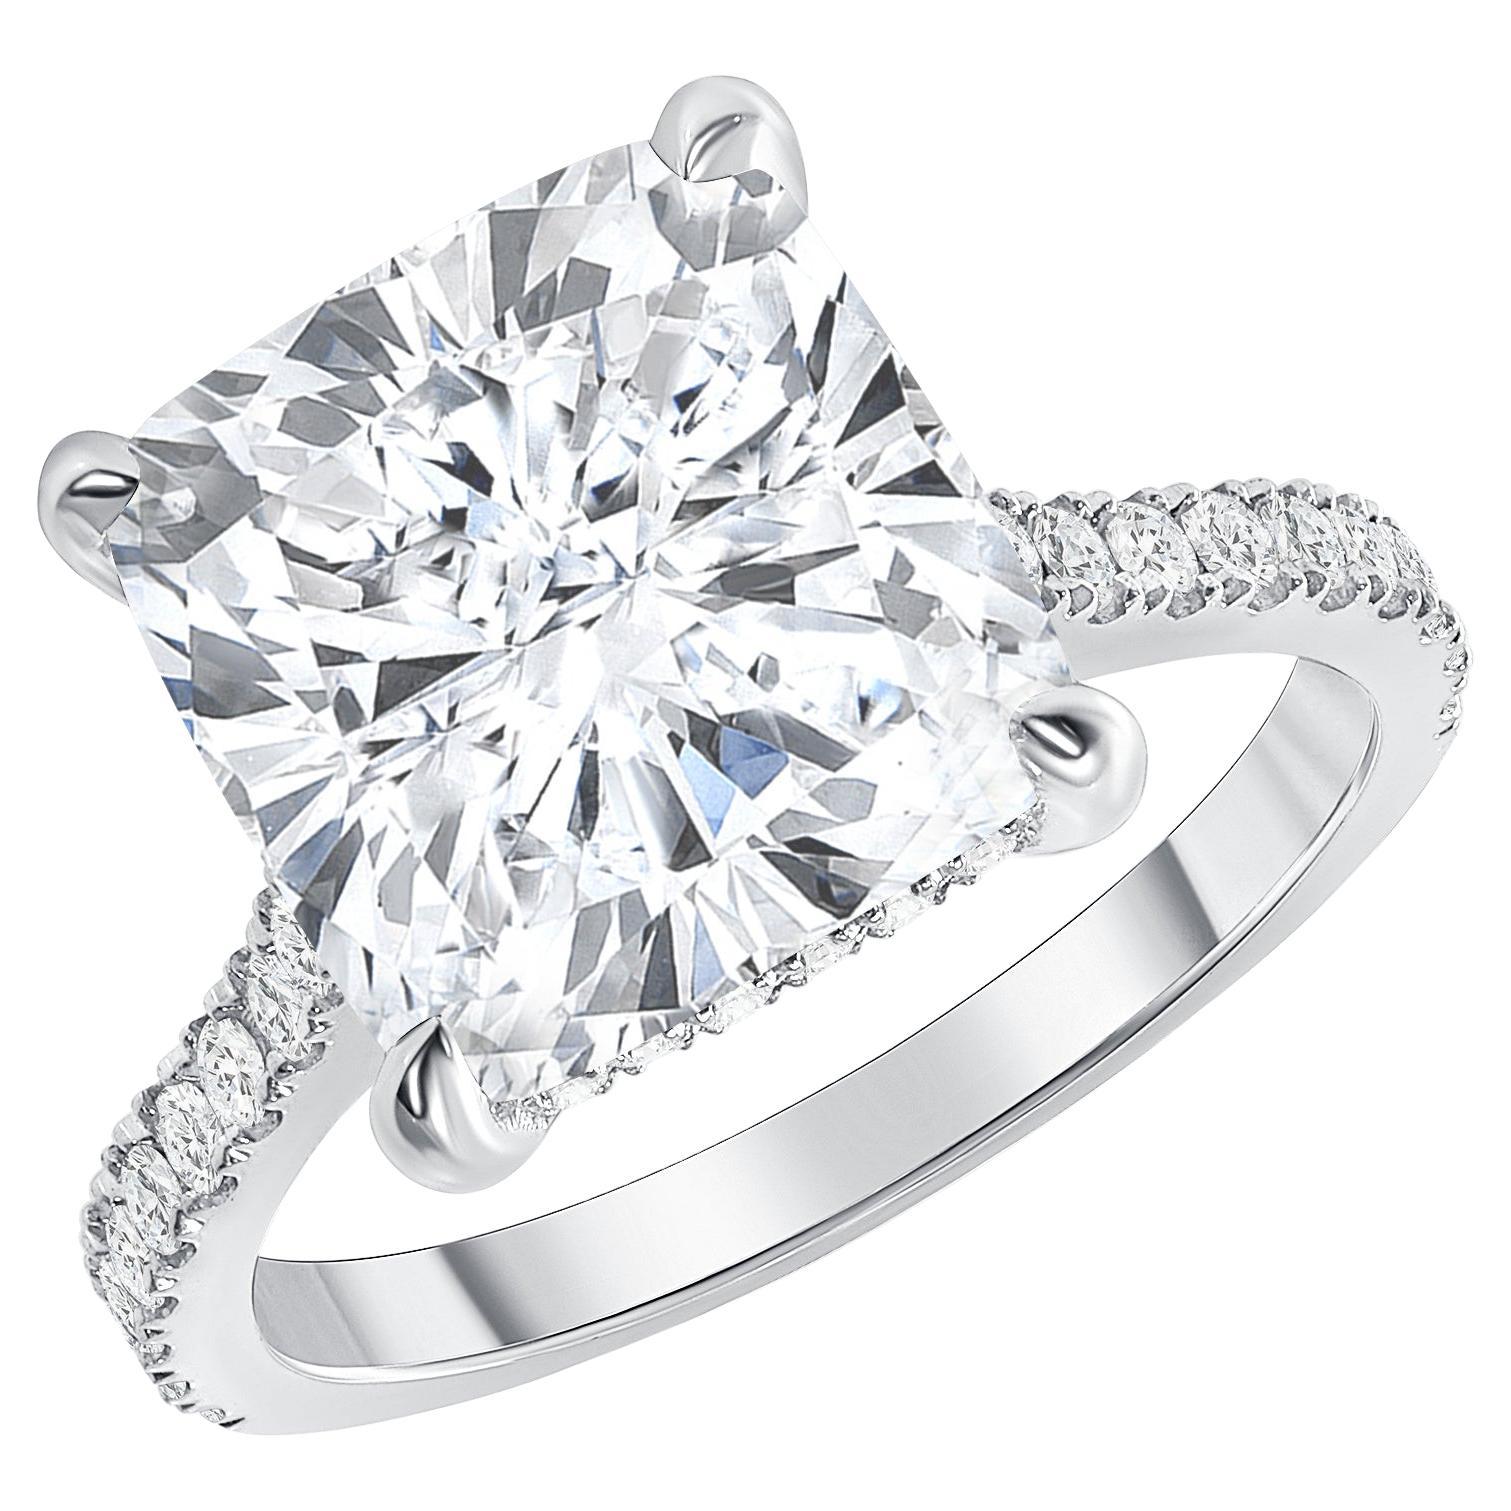 3.60 Carat Cushion Cut Engagement Ring Natural Round Diamonds GIA Certified VS